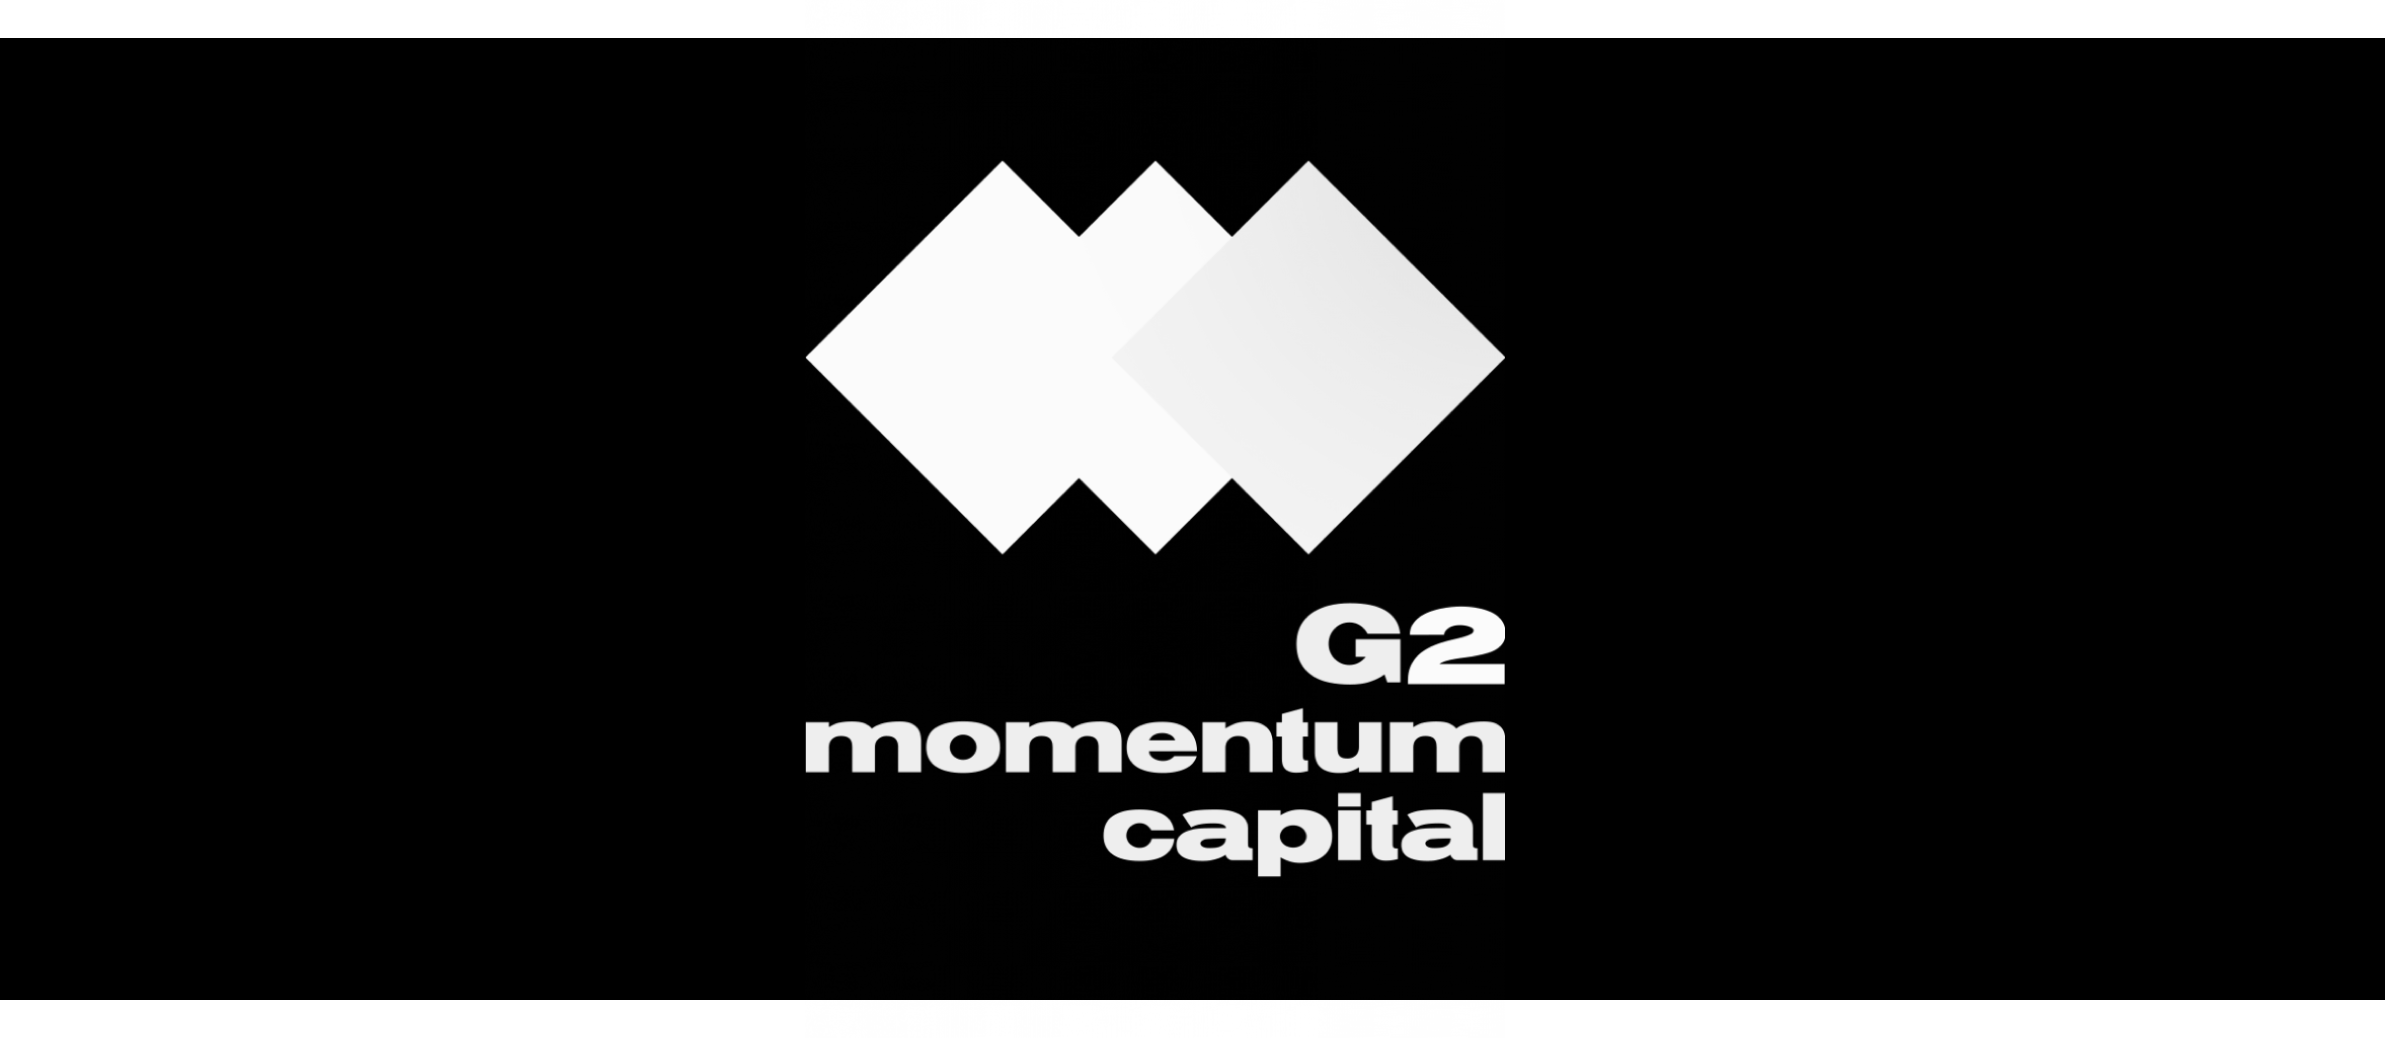 G2 momentum capital